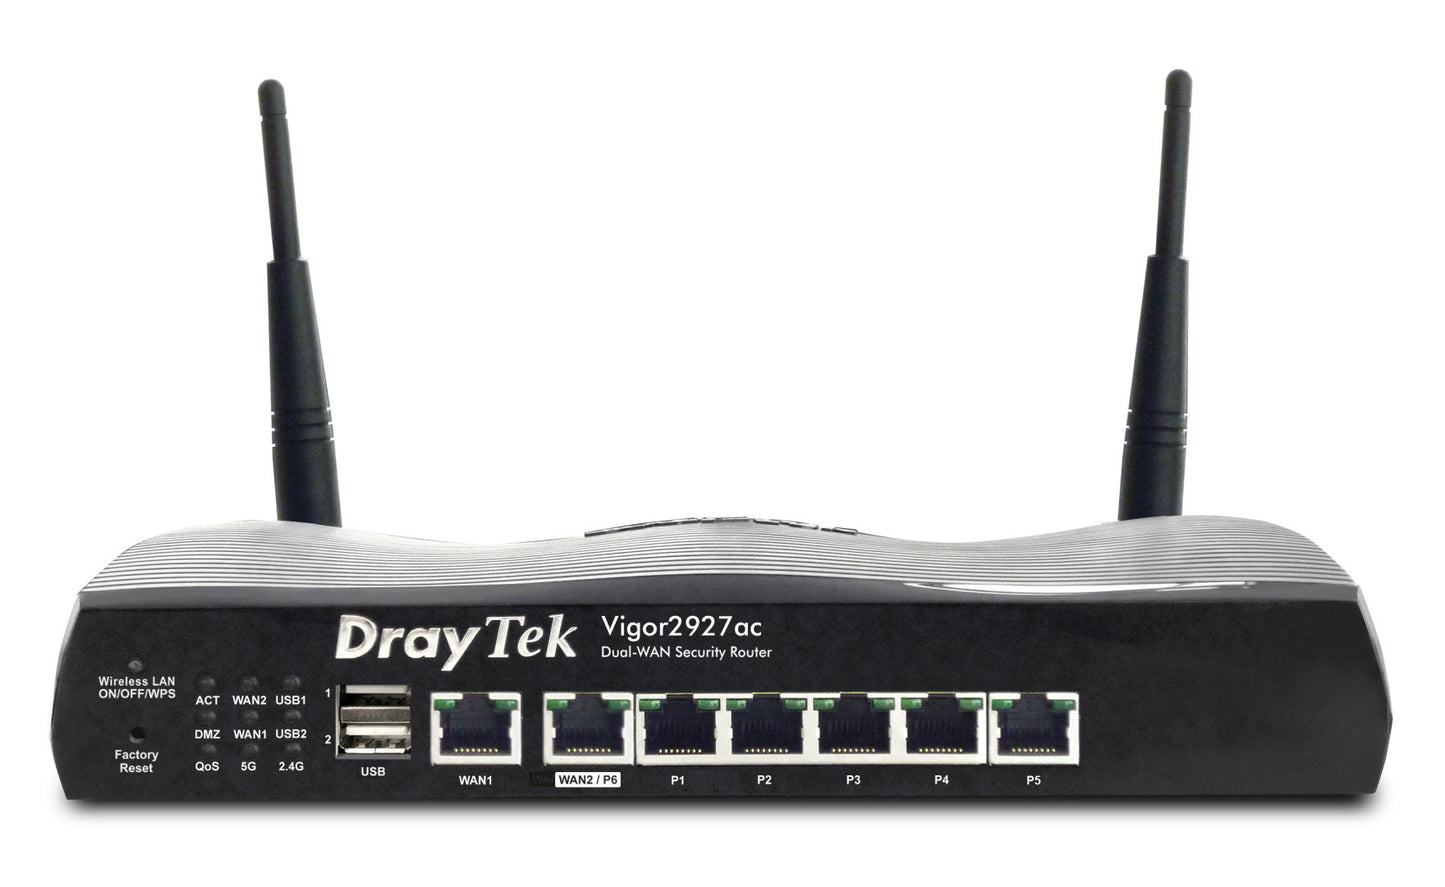 Draytek 2927ac Dual-WAN Security Router Front